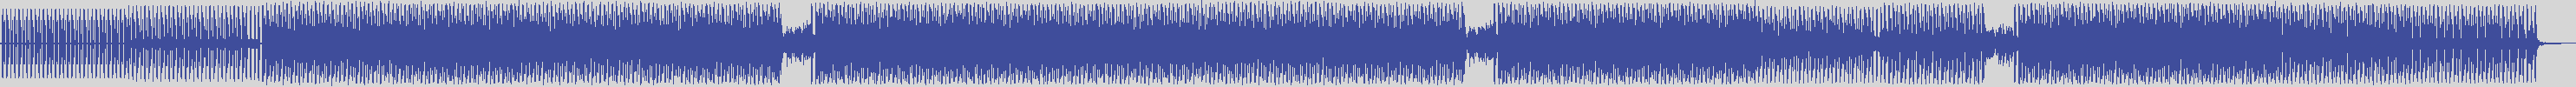 airplane_records [ARP1027] Luxor - Back to Love [Luca Cassani Superfigo Remix] audio wave form